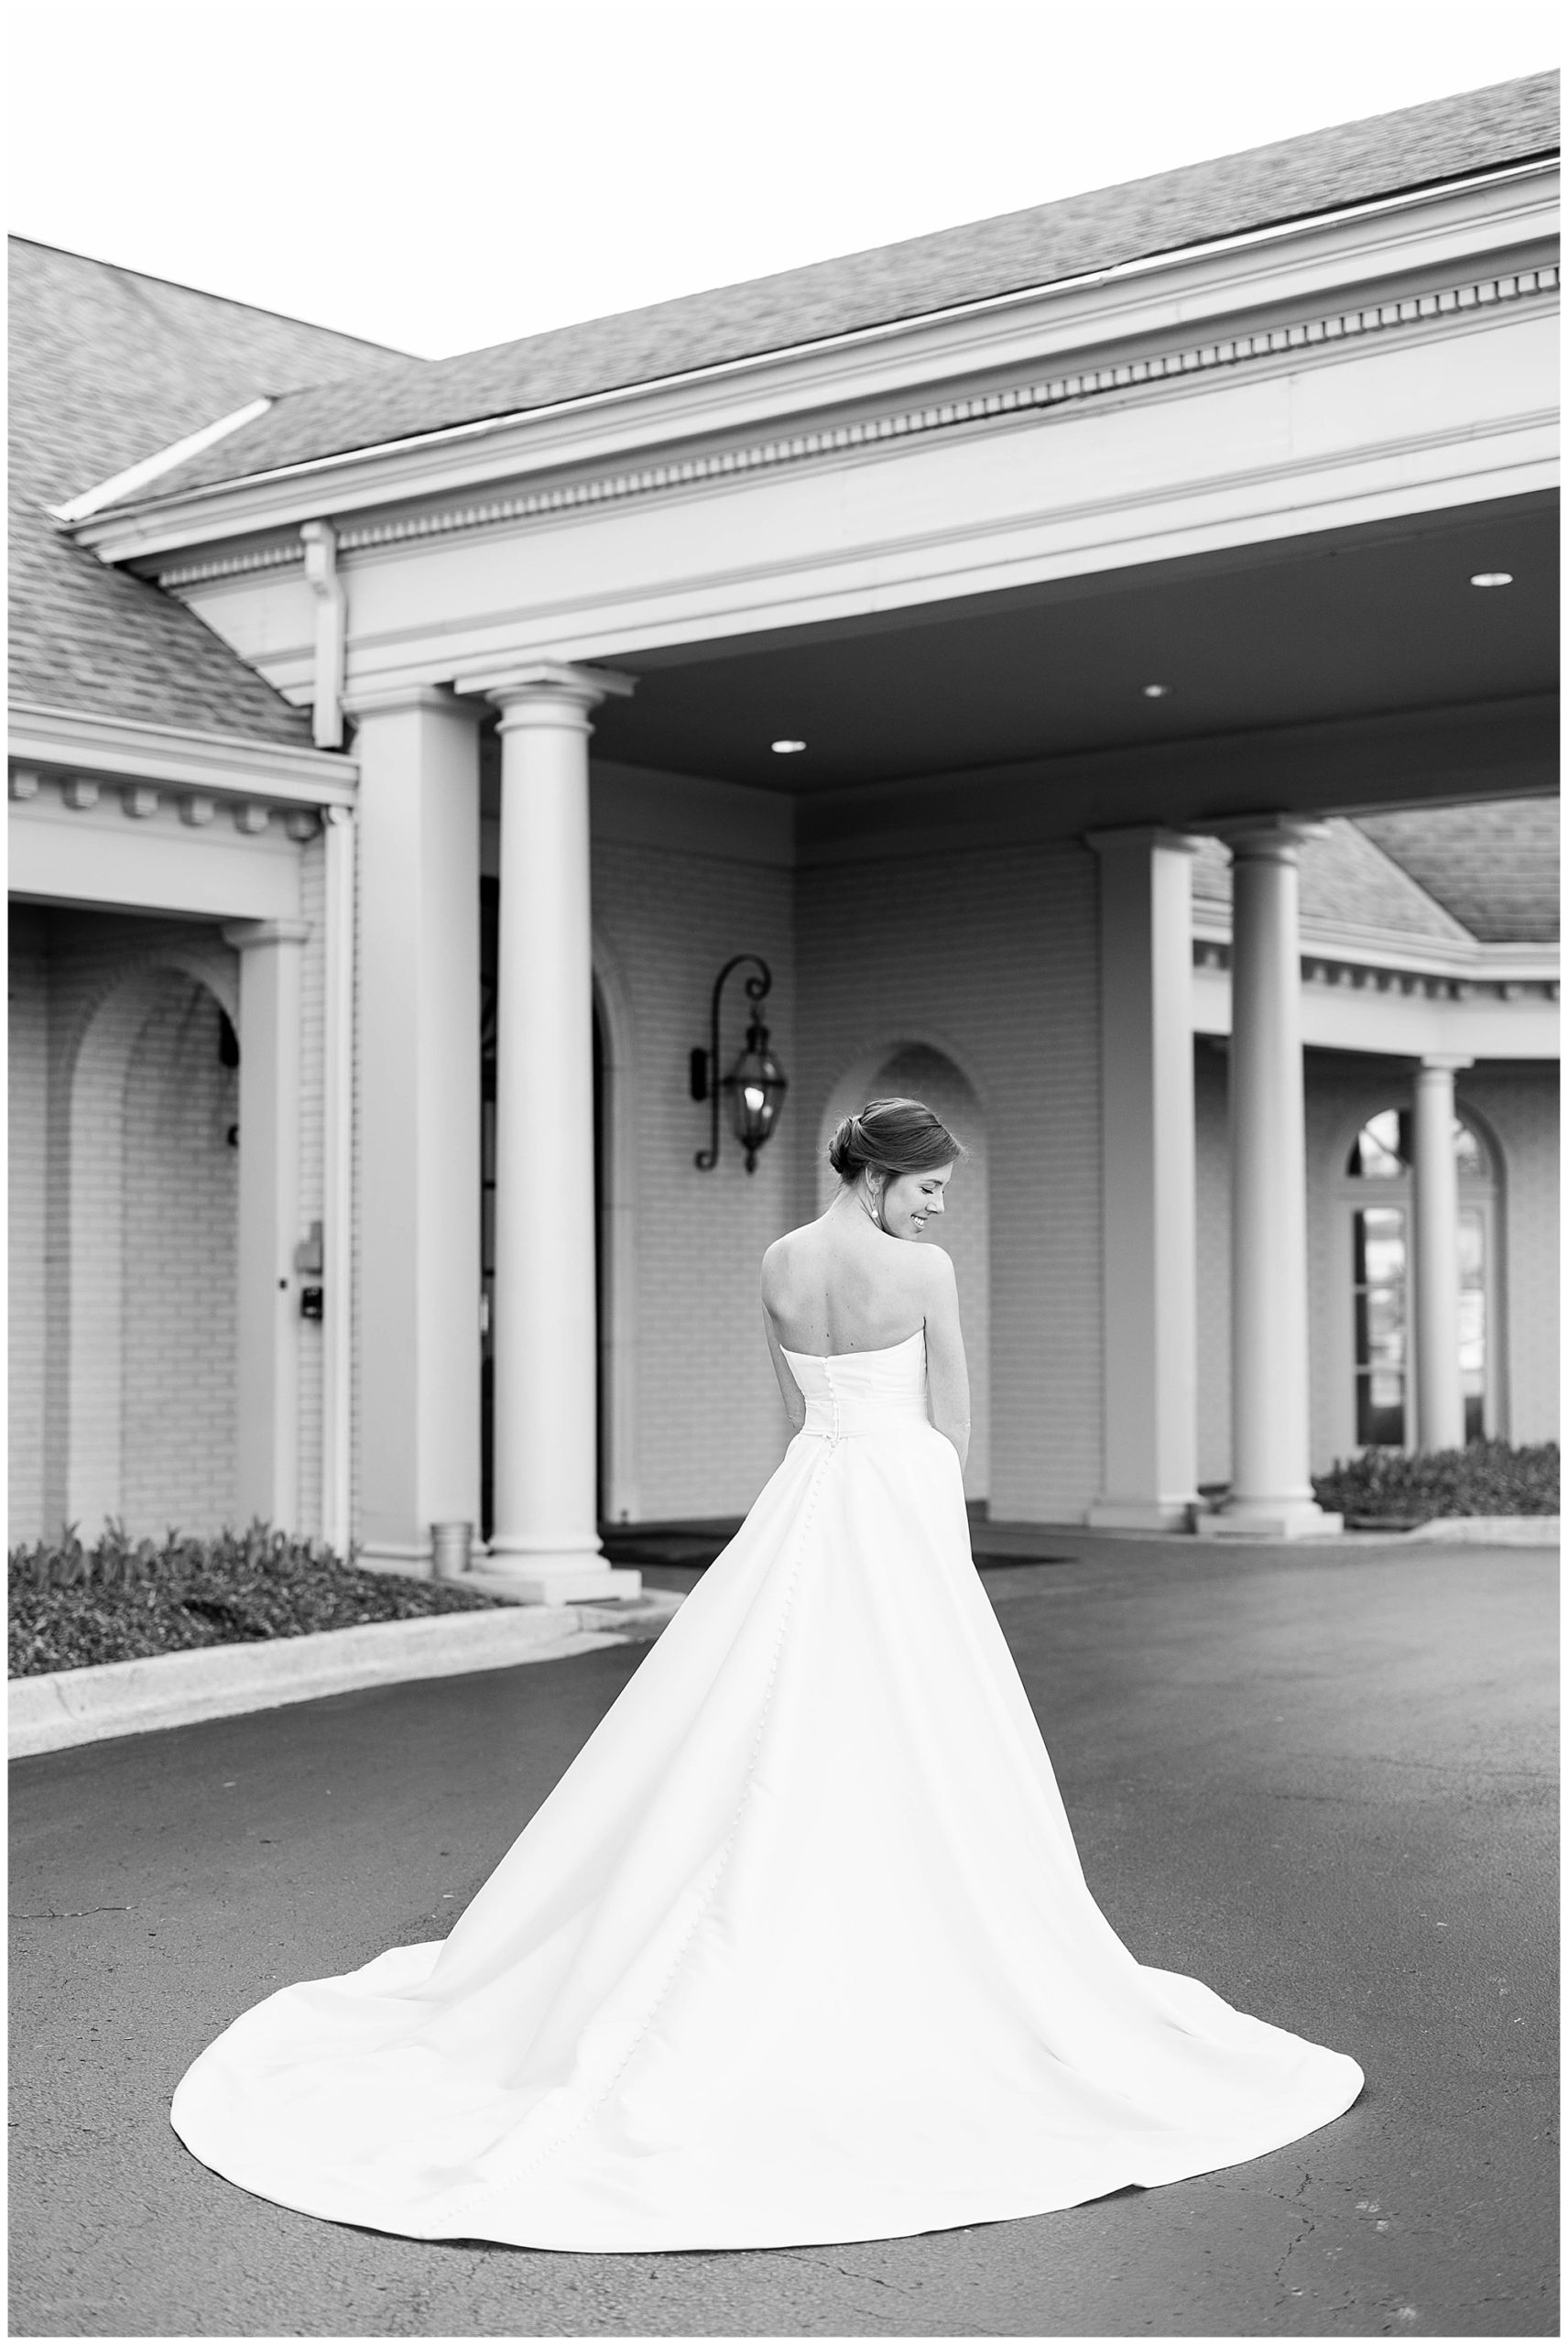 Eleanor Stenner Photography - a Birmingham, AL wedding photographer - shoots Kelly's bridal portraits before her wedding!